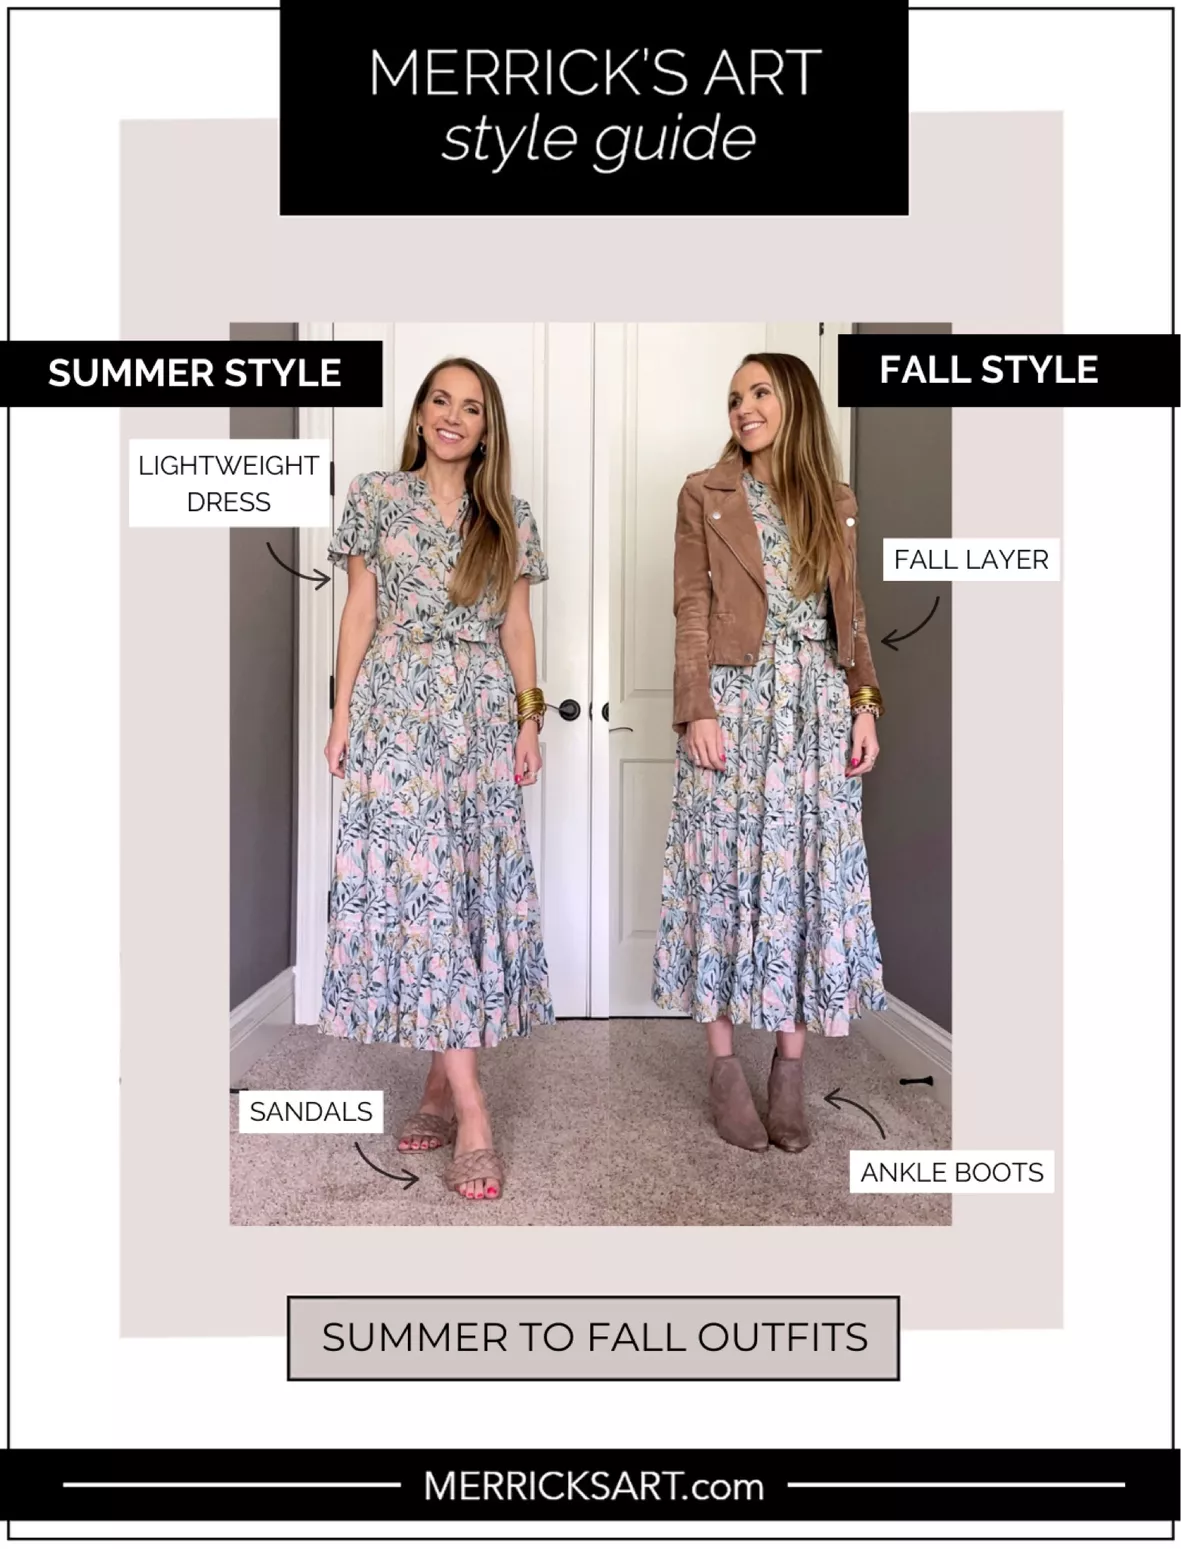 How to Wear a Midi Dress in the Fall - Merrick's Art